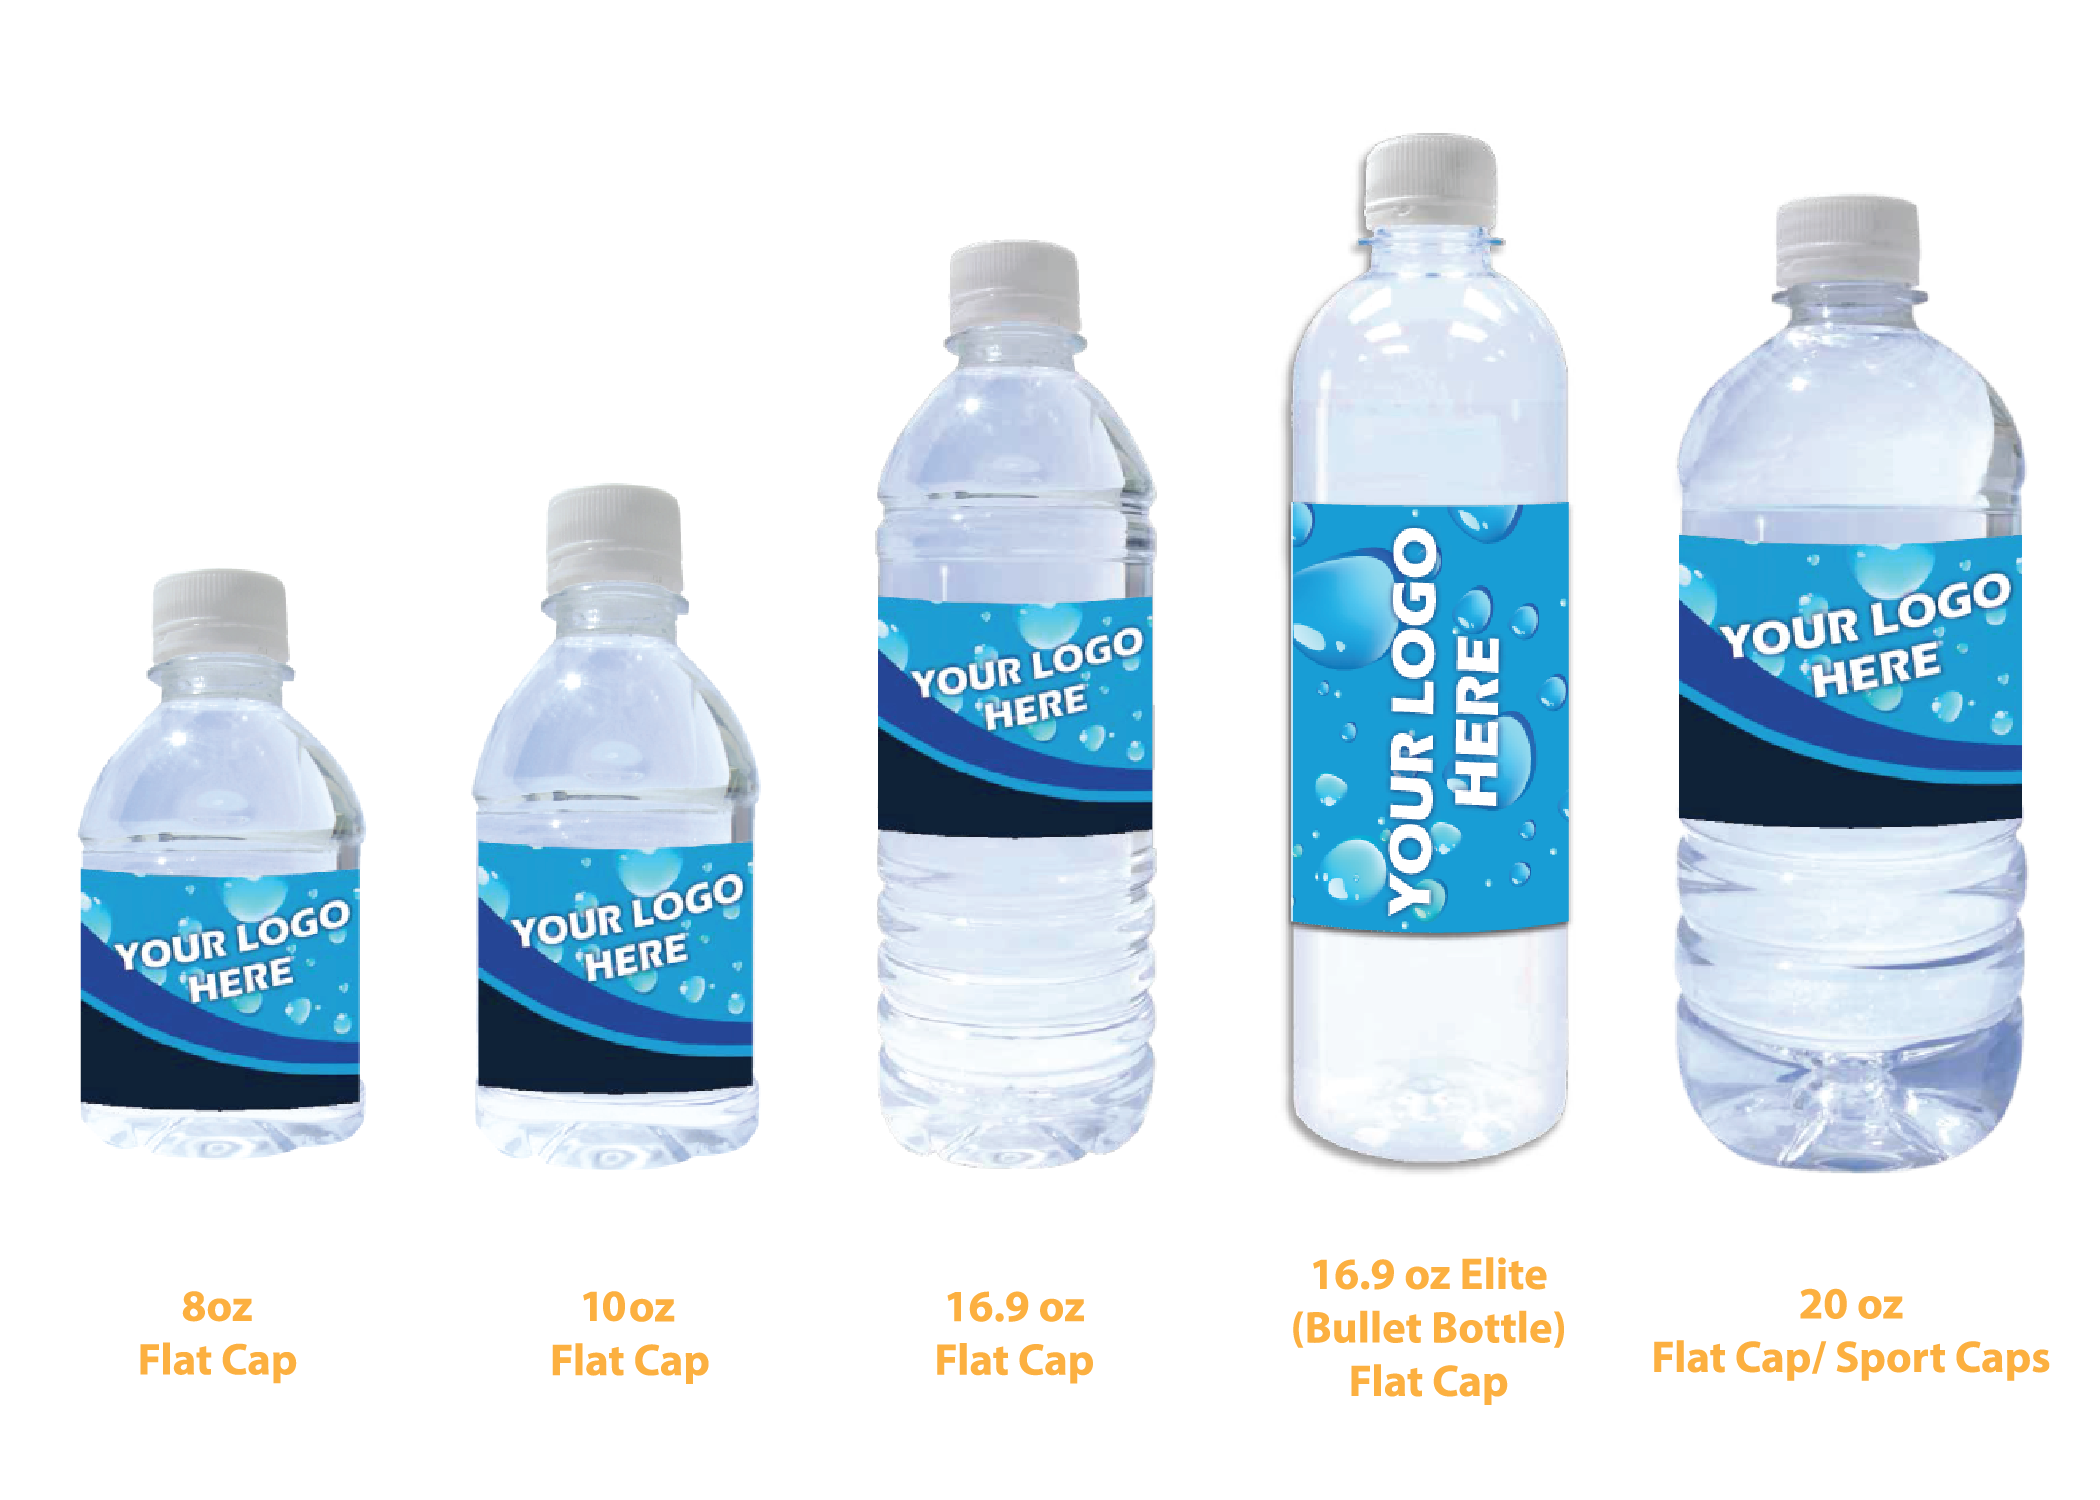 all bottles sizes, 8oz, 10oz, 16.9oz, Elite 16.9oz, and 20oz, with blue label saying Your Logo Here